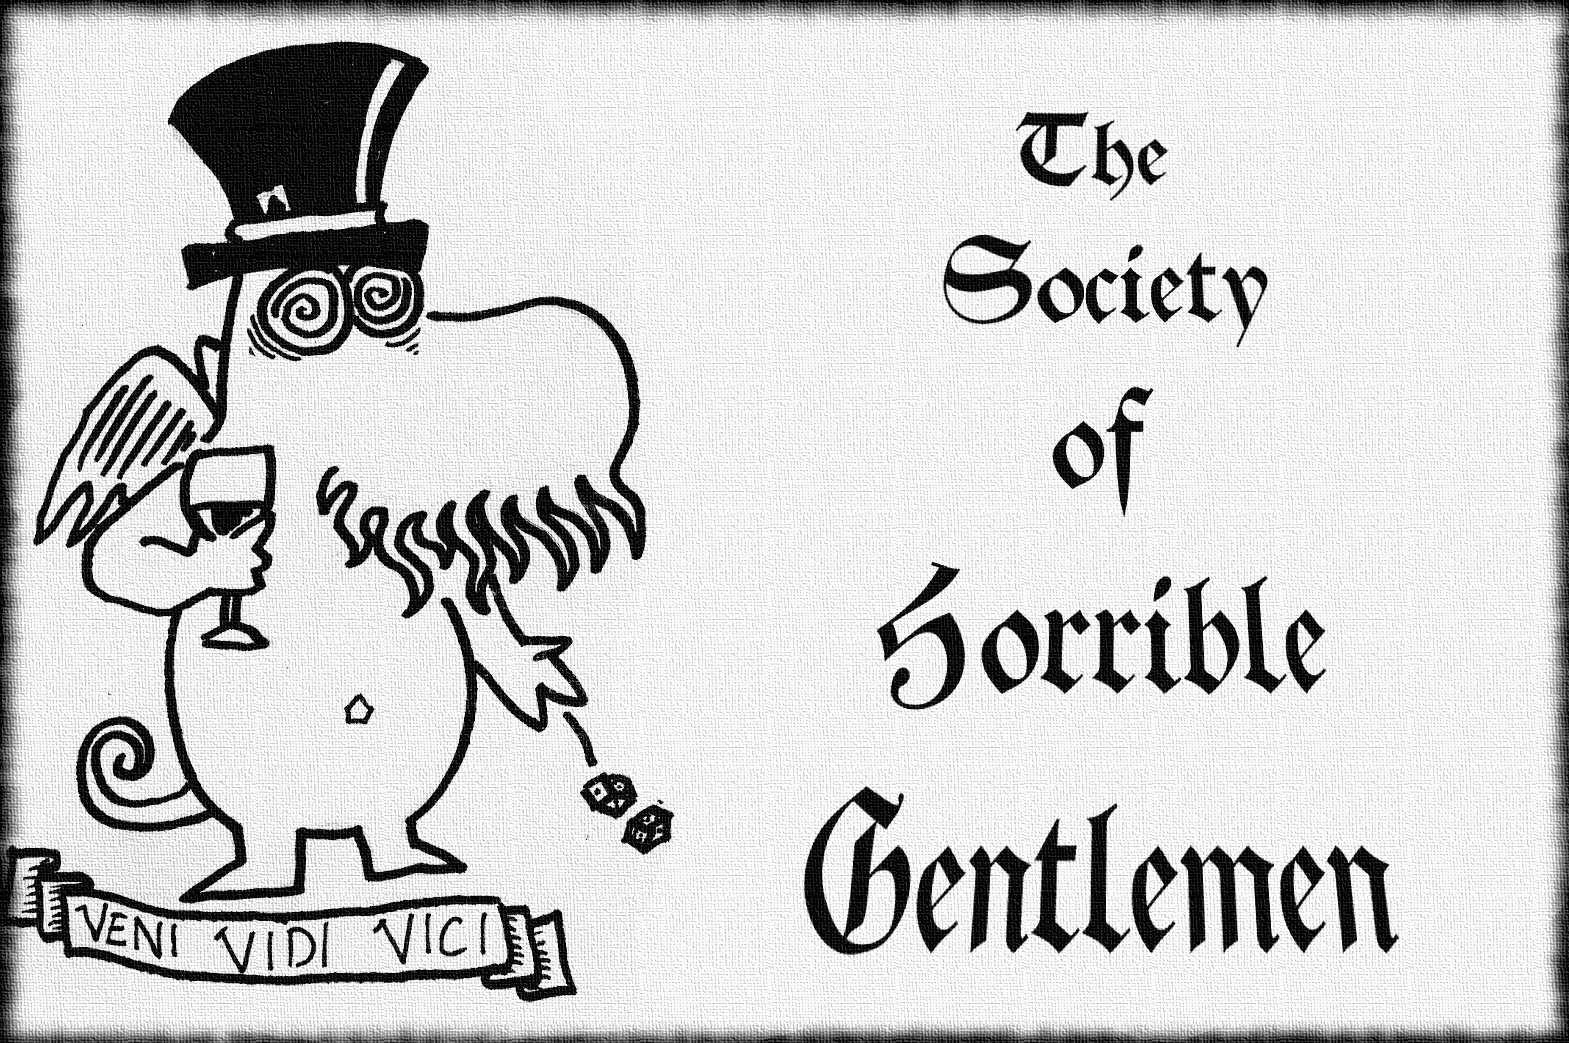 The Society Of Horrible Gentlemen